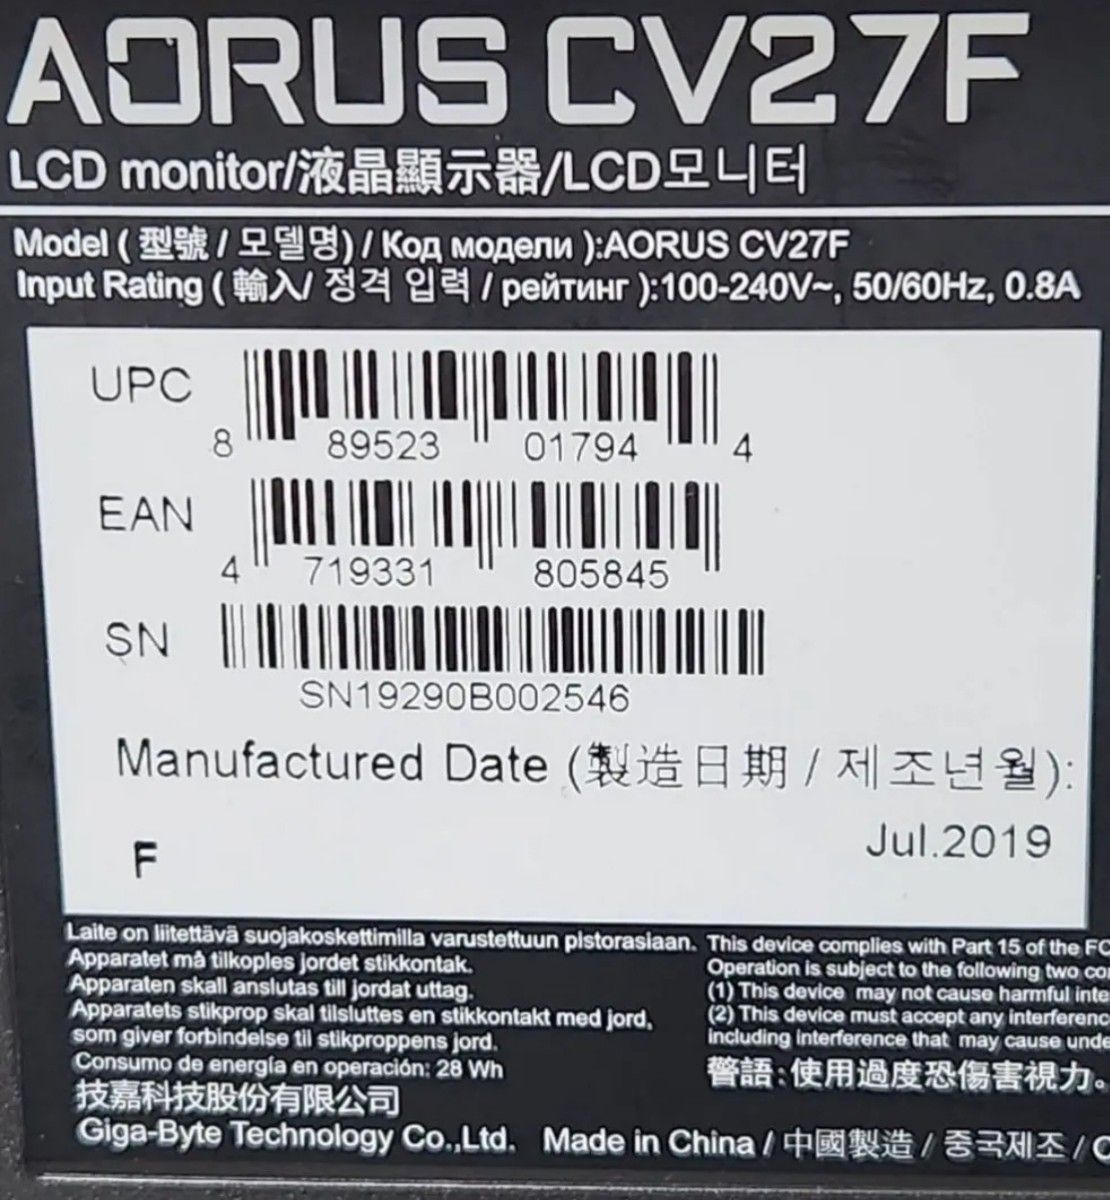 Gigabyte Aorus CV27F 27インチ湾曲ゲーミングモニター ギガバイト Curved Gaming Monitor